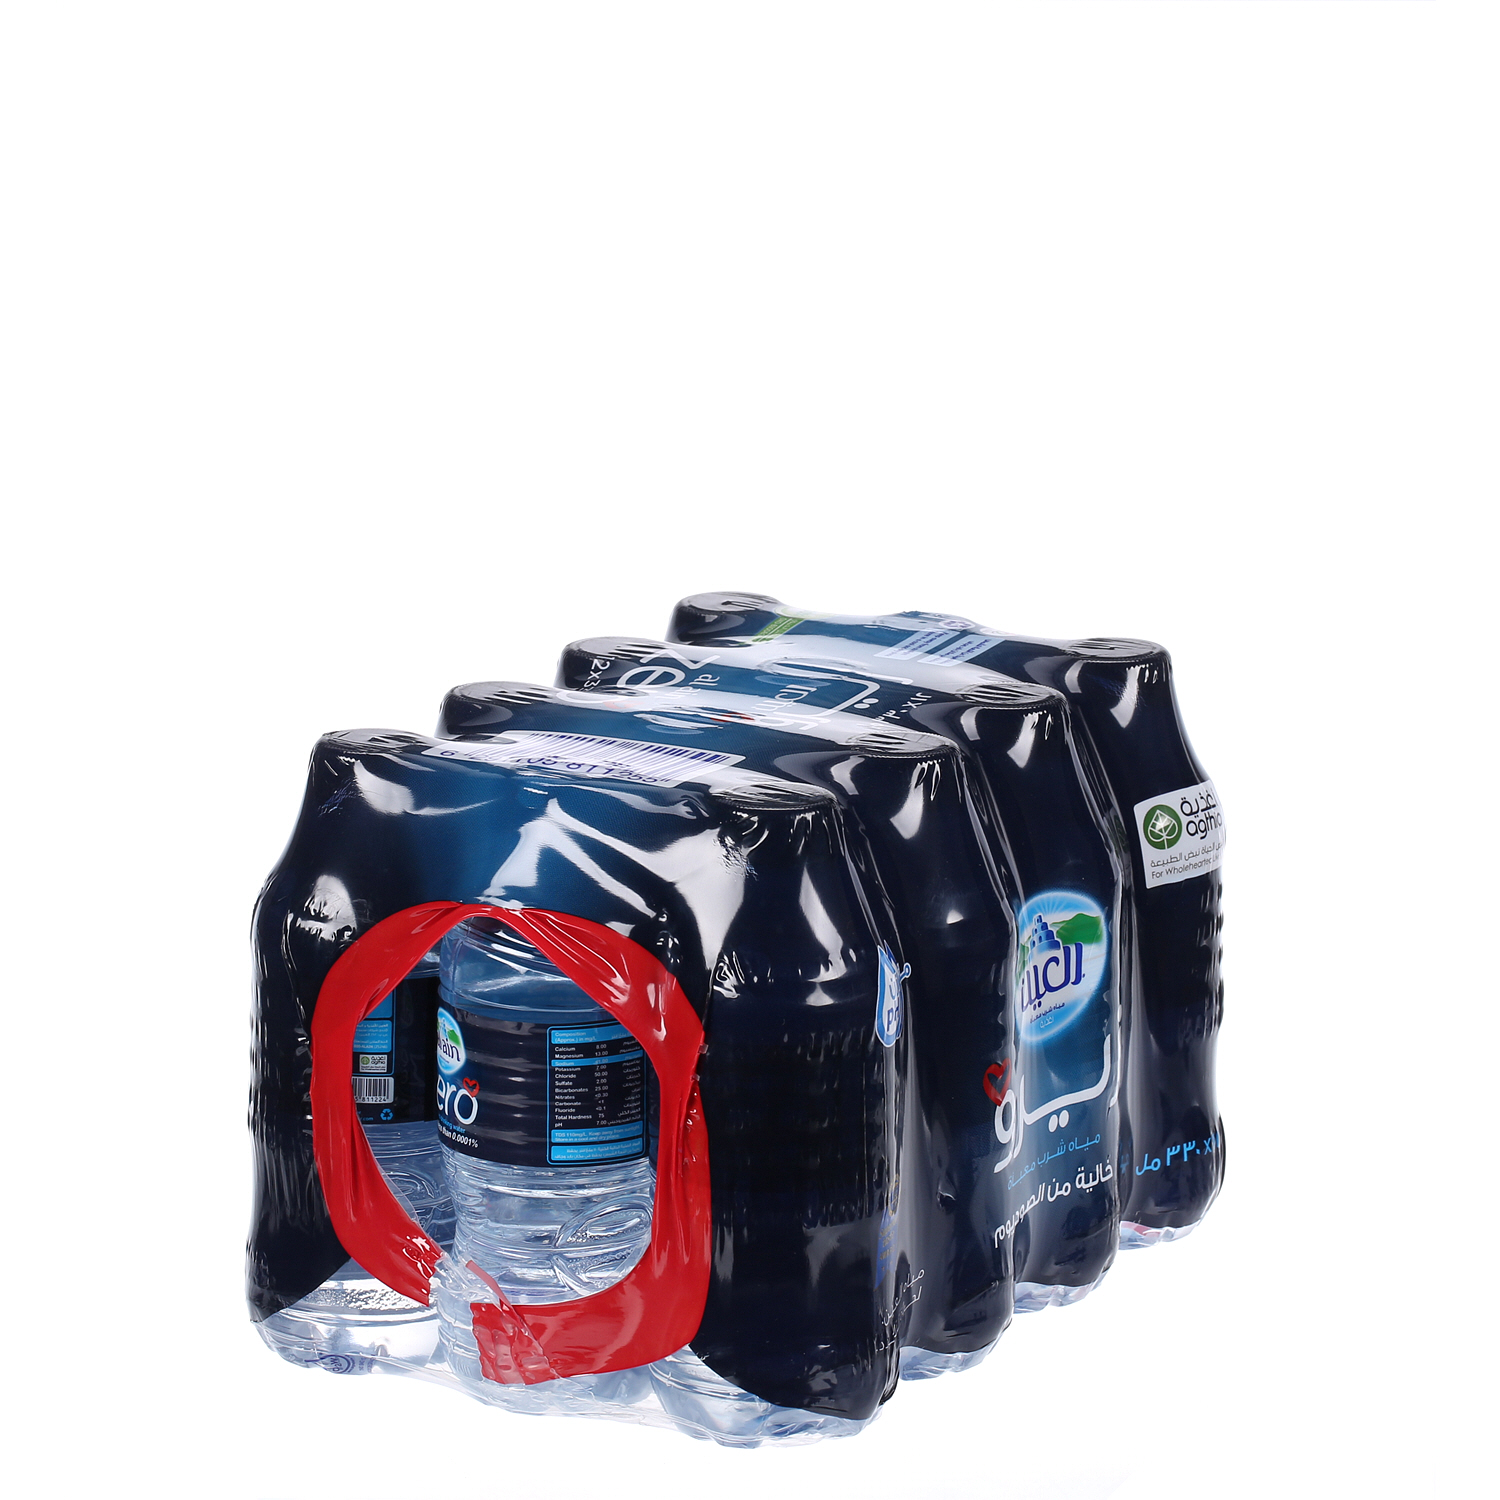 Al Ain Water Zero 330 ml × 12 Pack